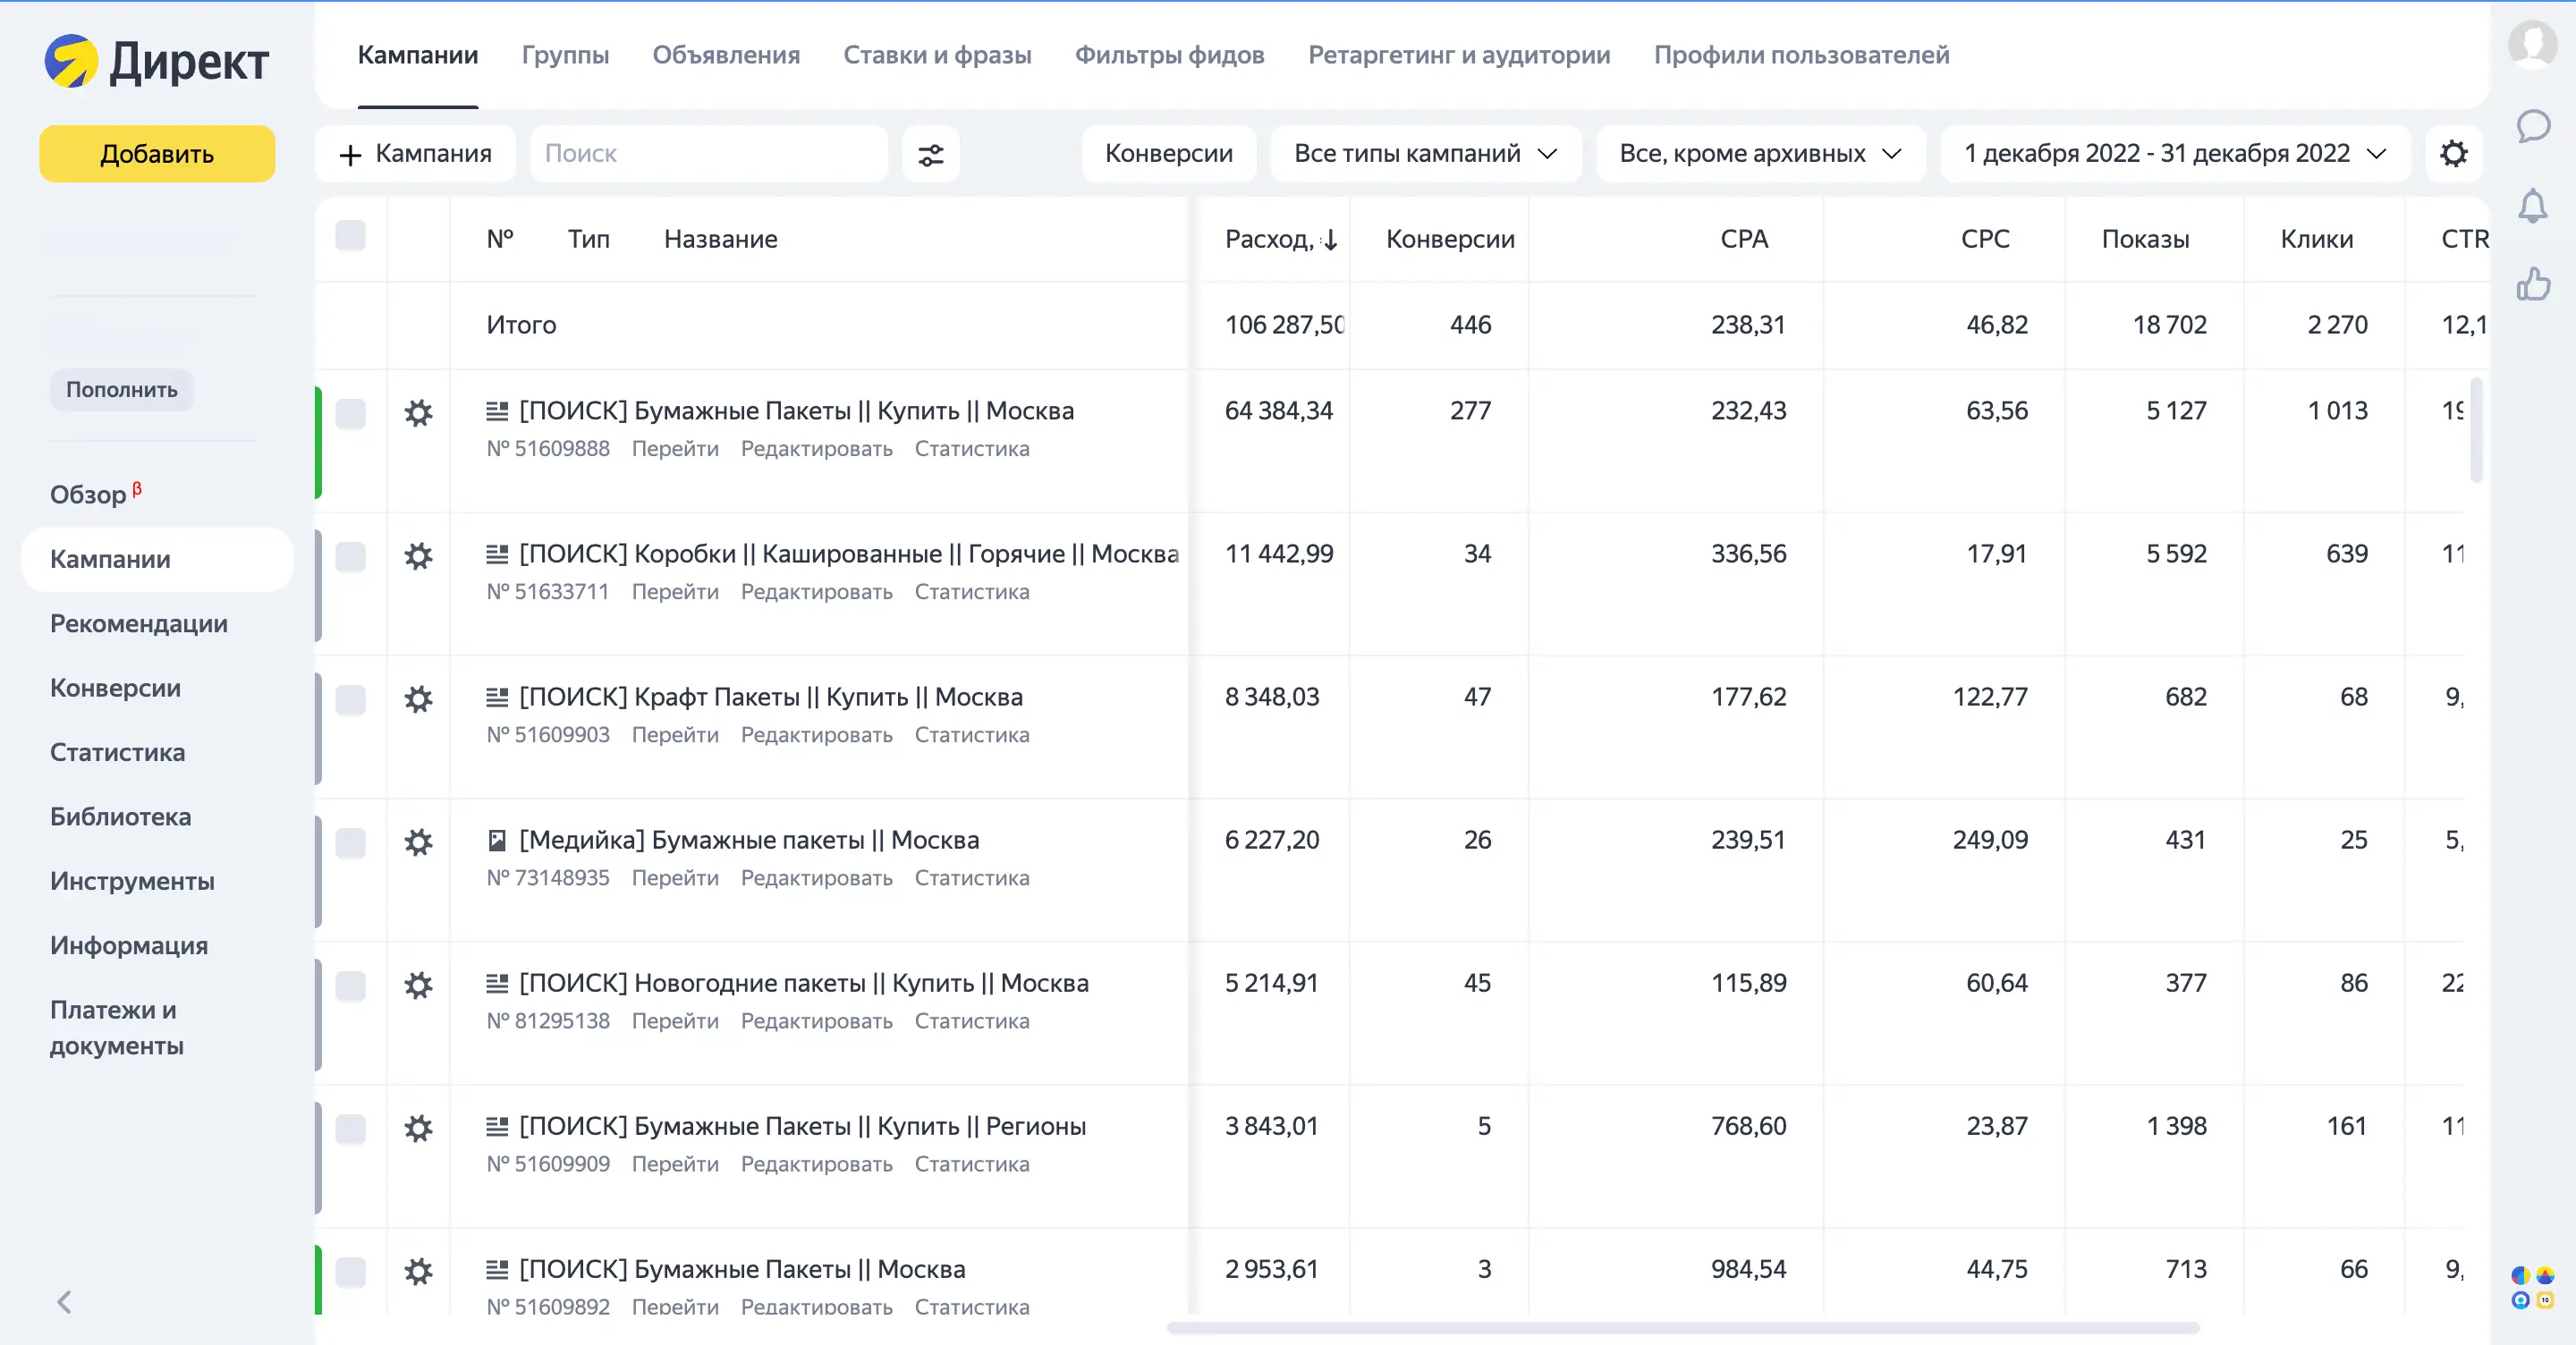 Яндекс Директ бумажные пакеты